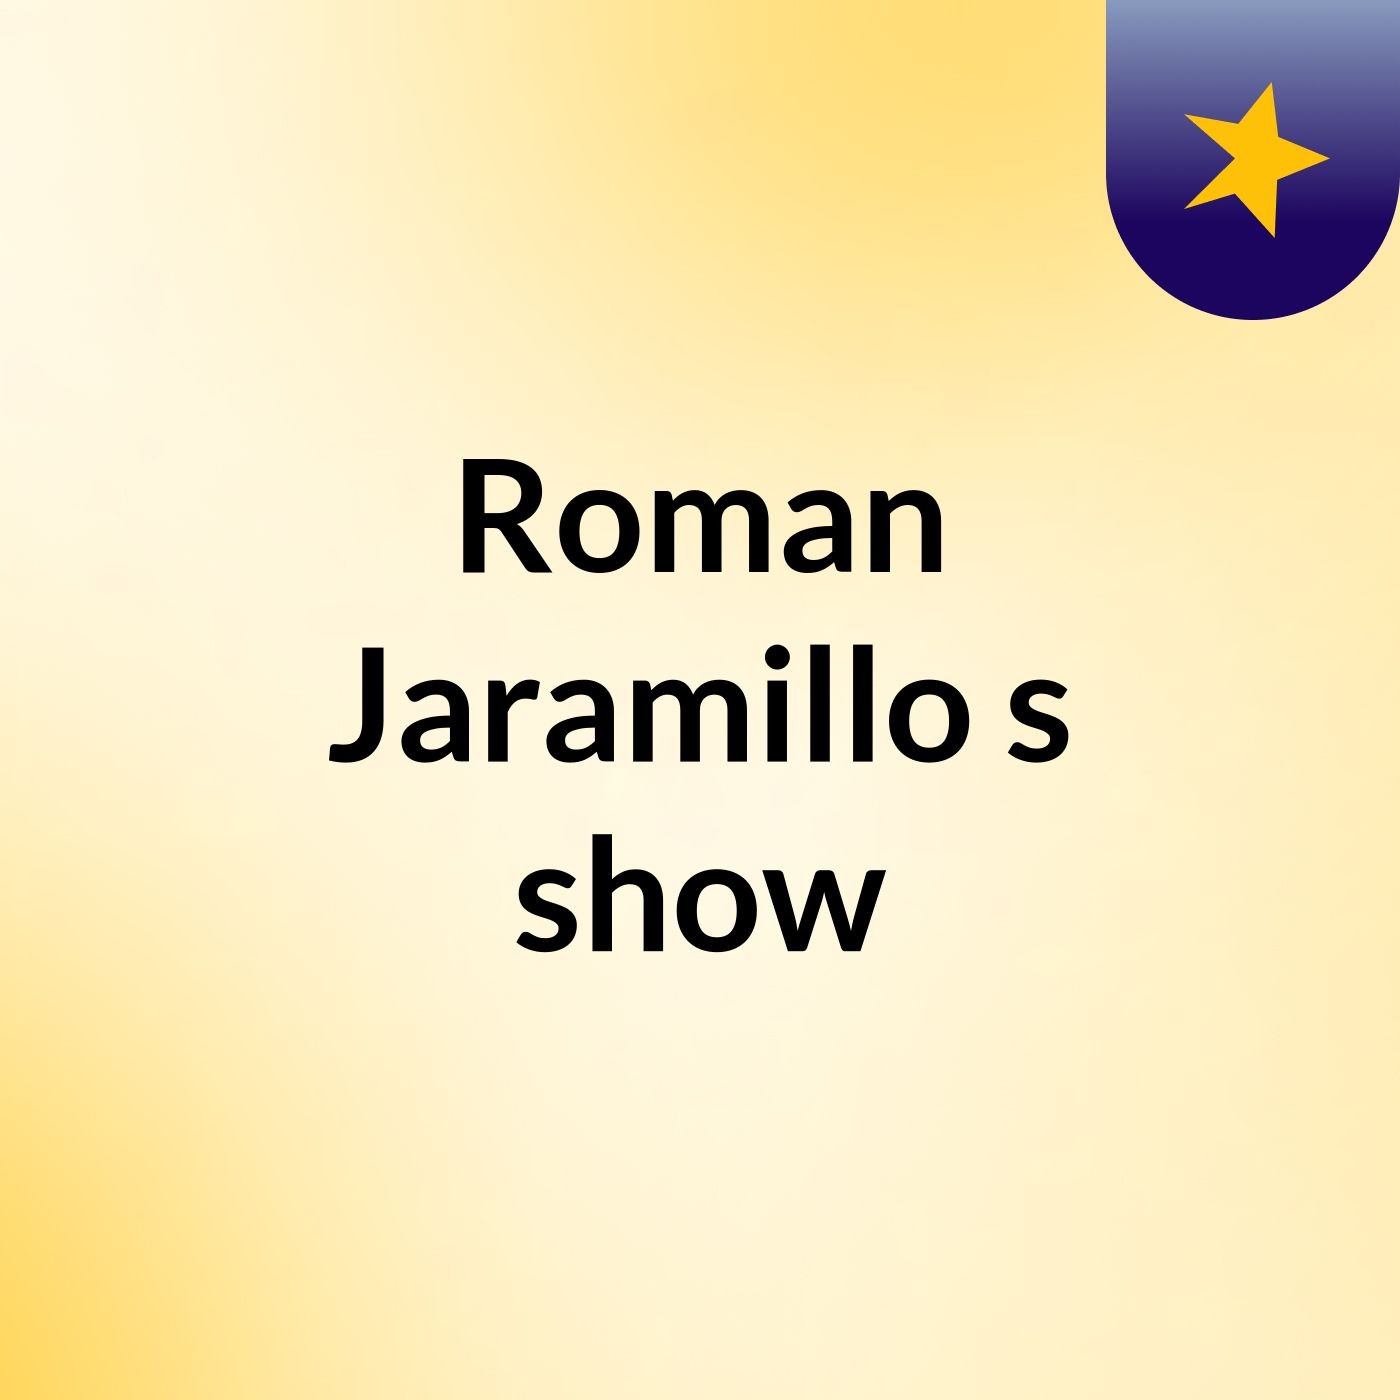 Roman Jaramillo's show